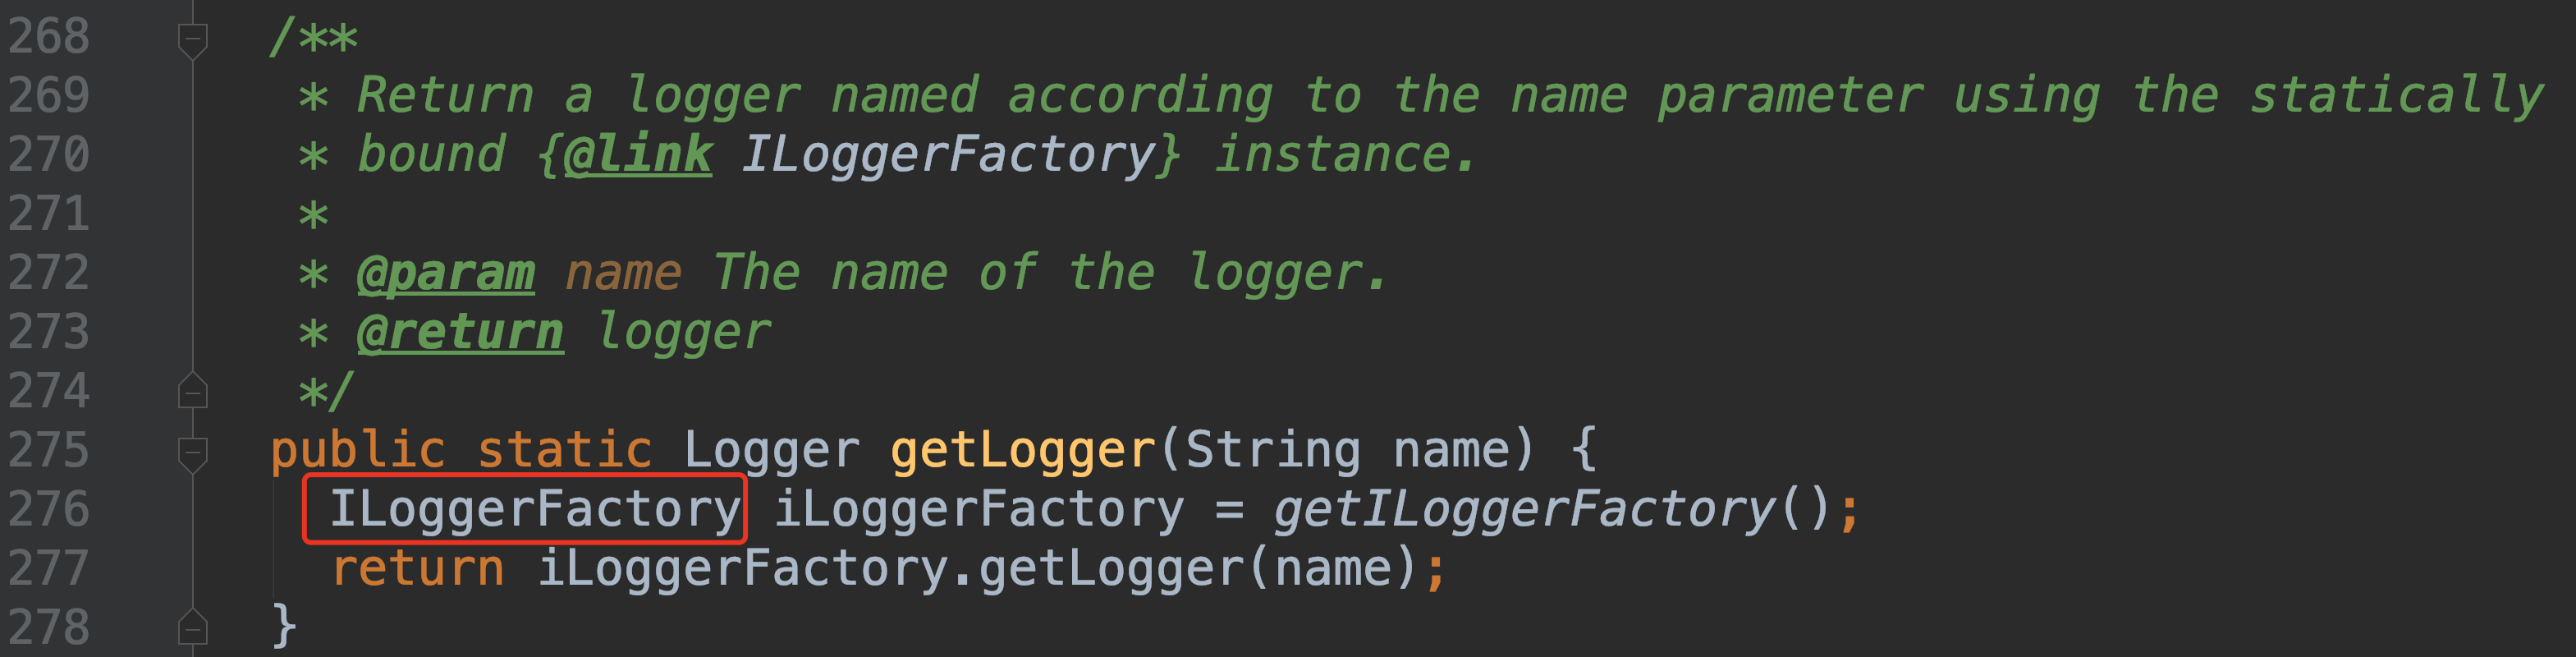 LoggerFactory#getLogger(String name)